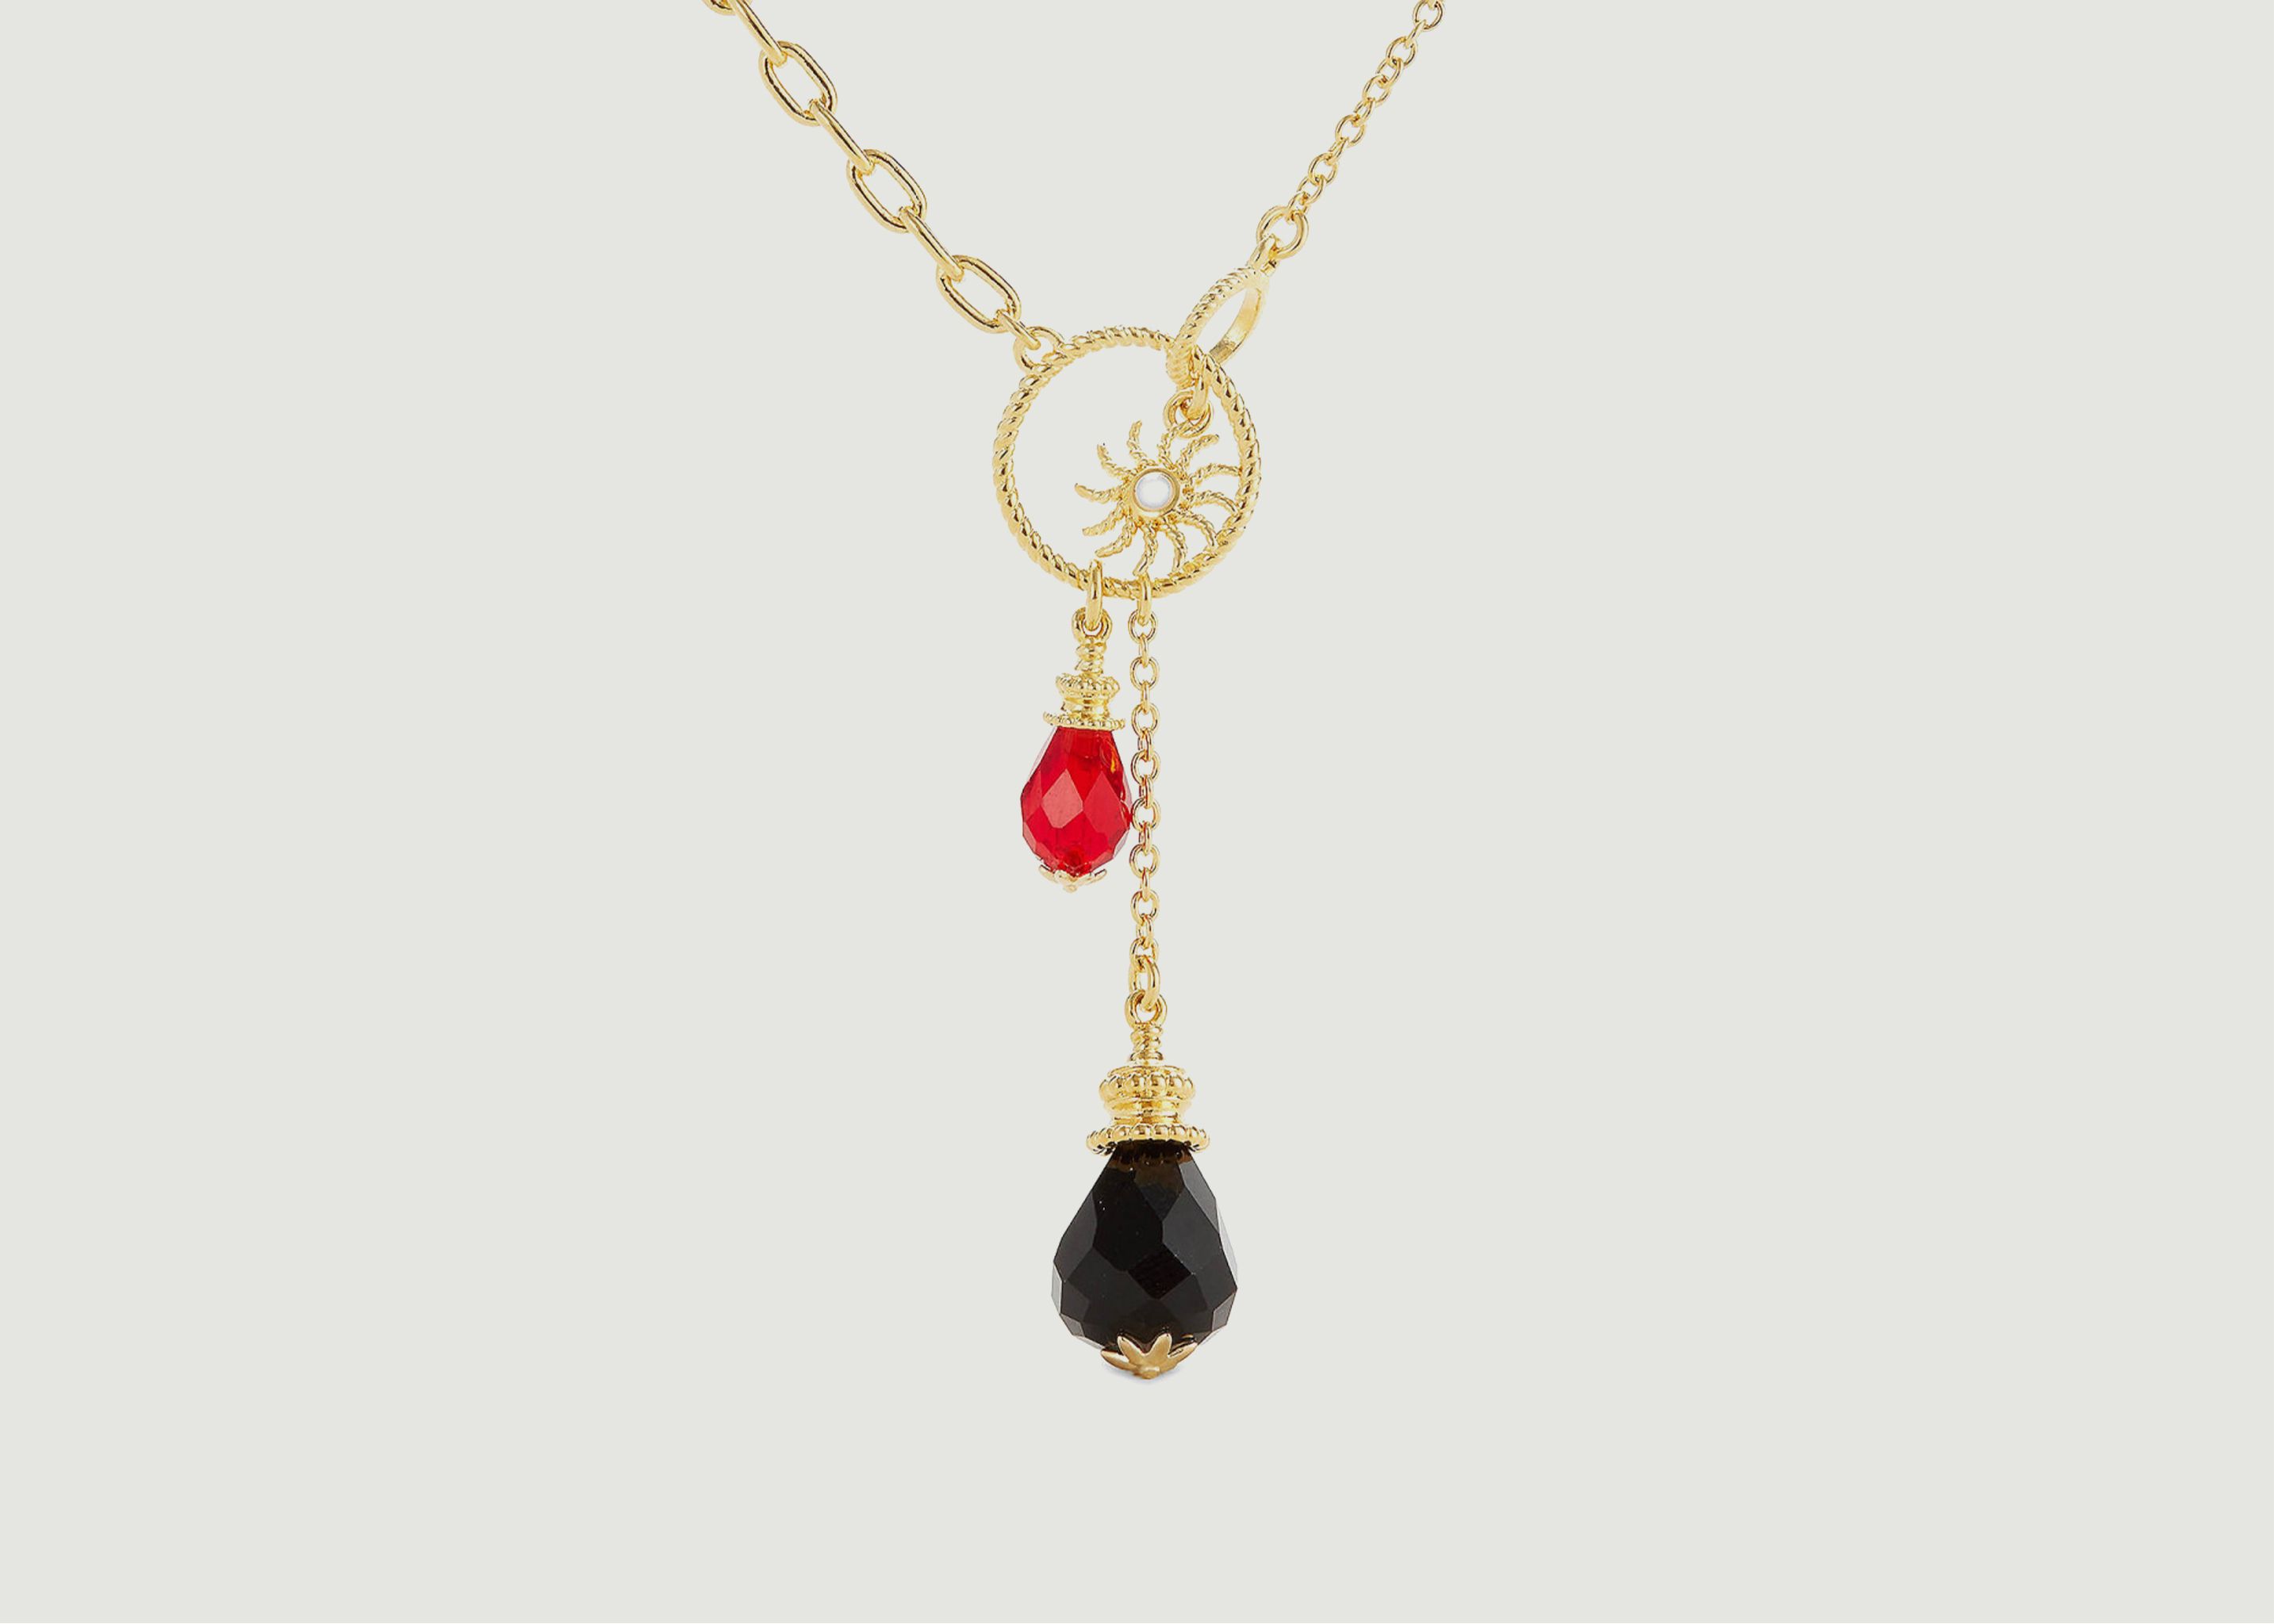 Chain necklace with sun and pearl pendant - Les Néréides